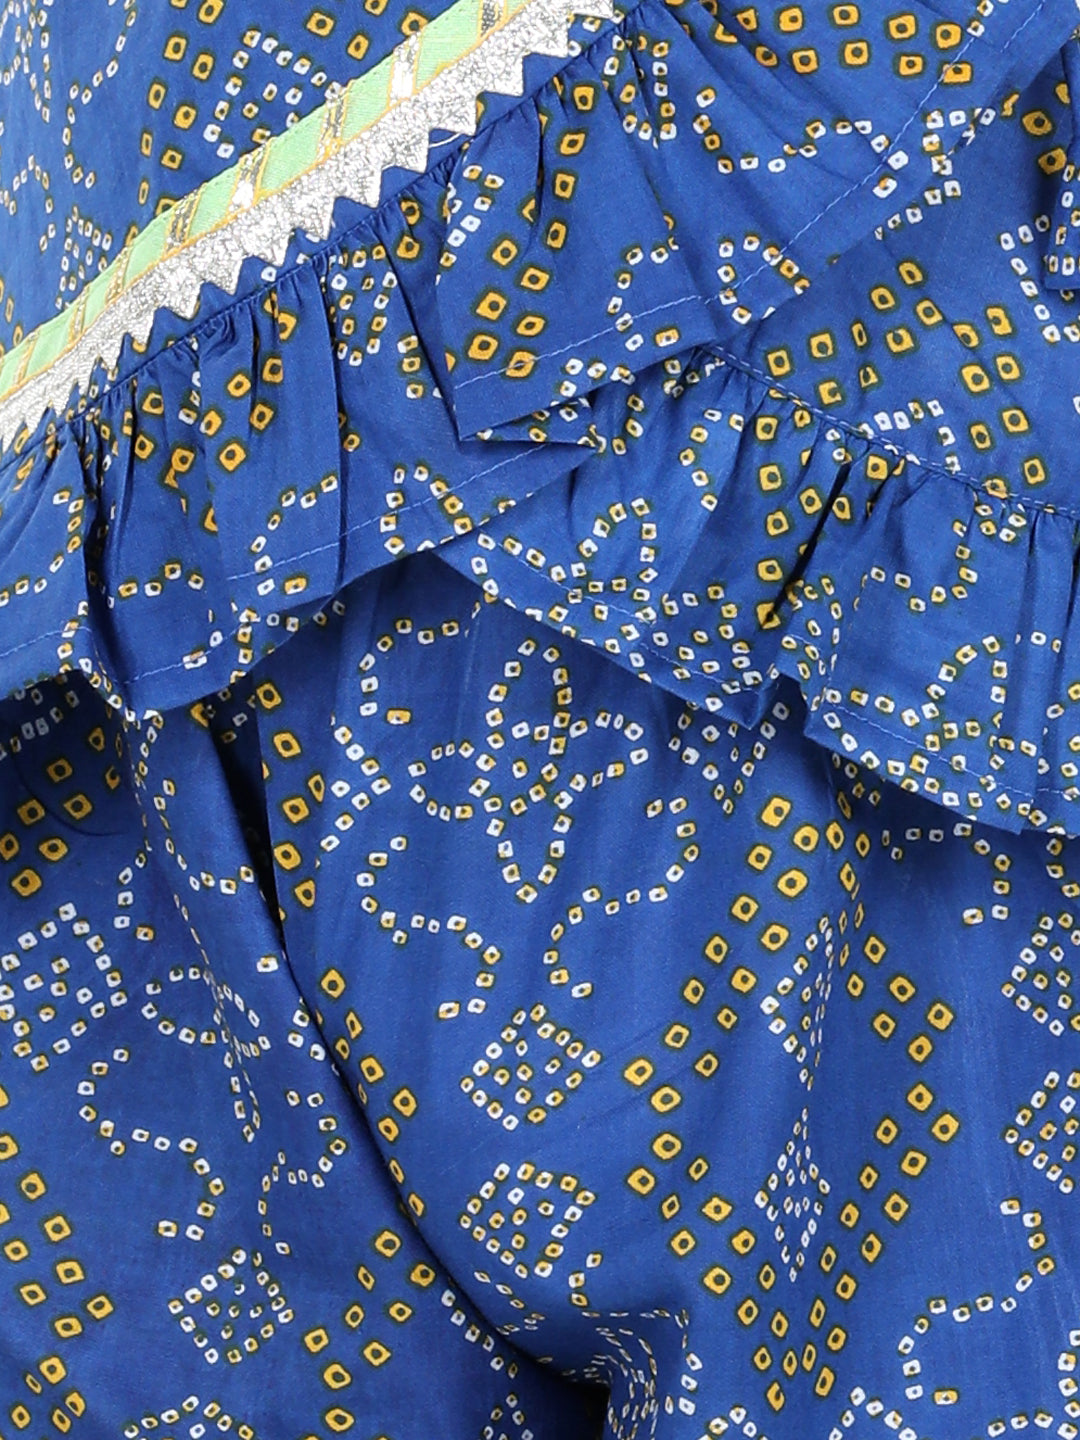 BownBee Sibling set Cotton Kurta Pajama and Top with Harem-Blue